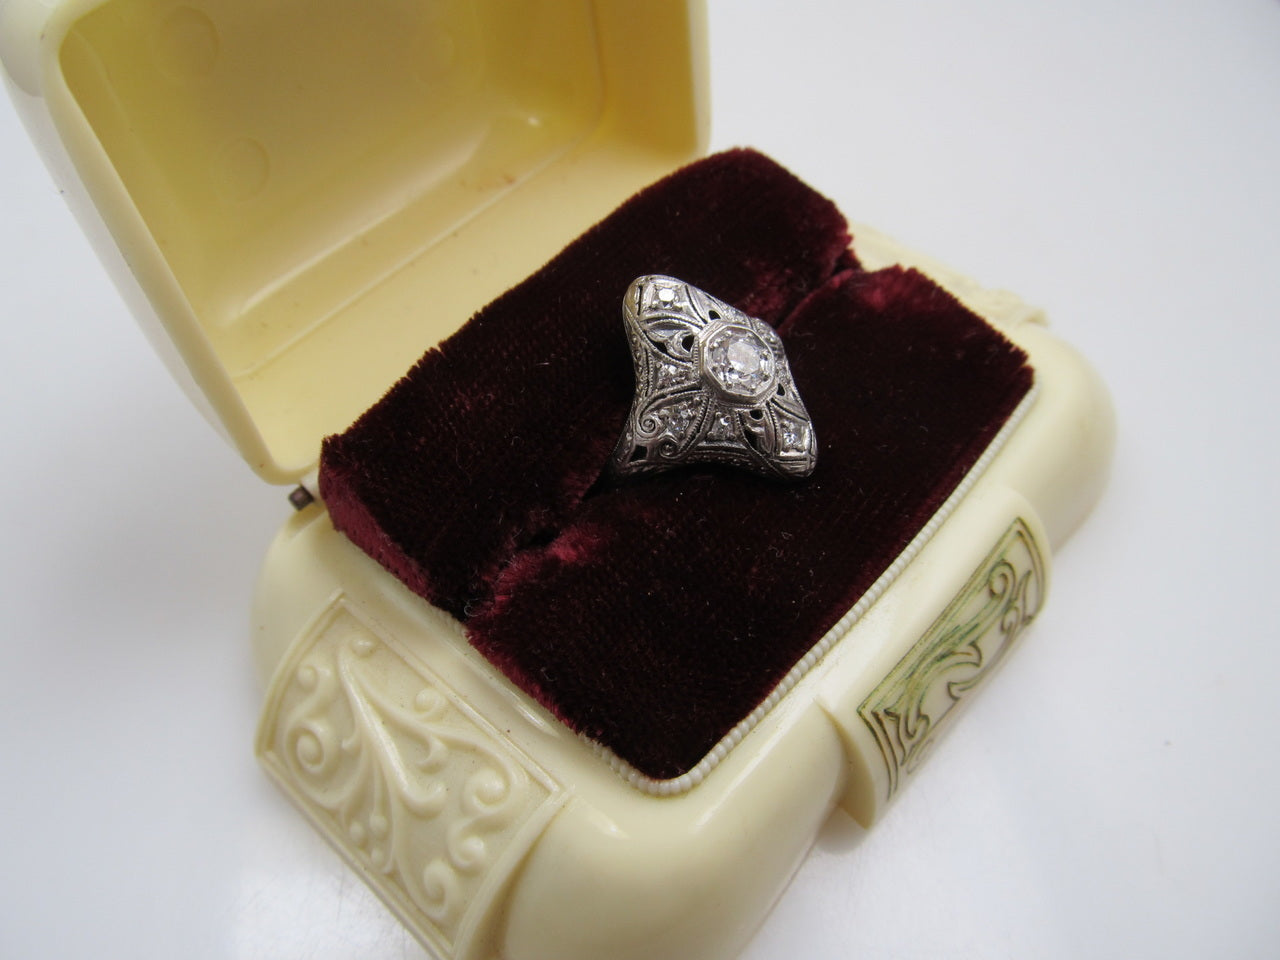 19k white gold filigree ring with a .25ct center OEC diamond.   Circa 1920.